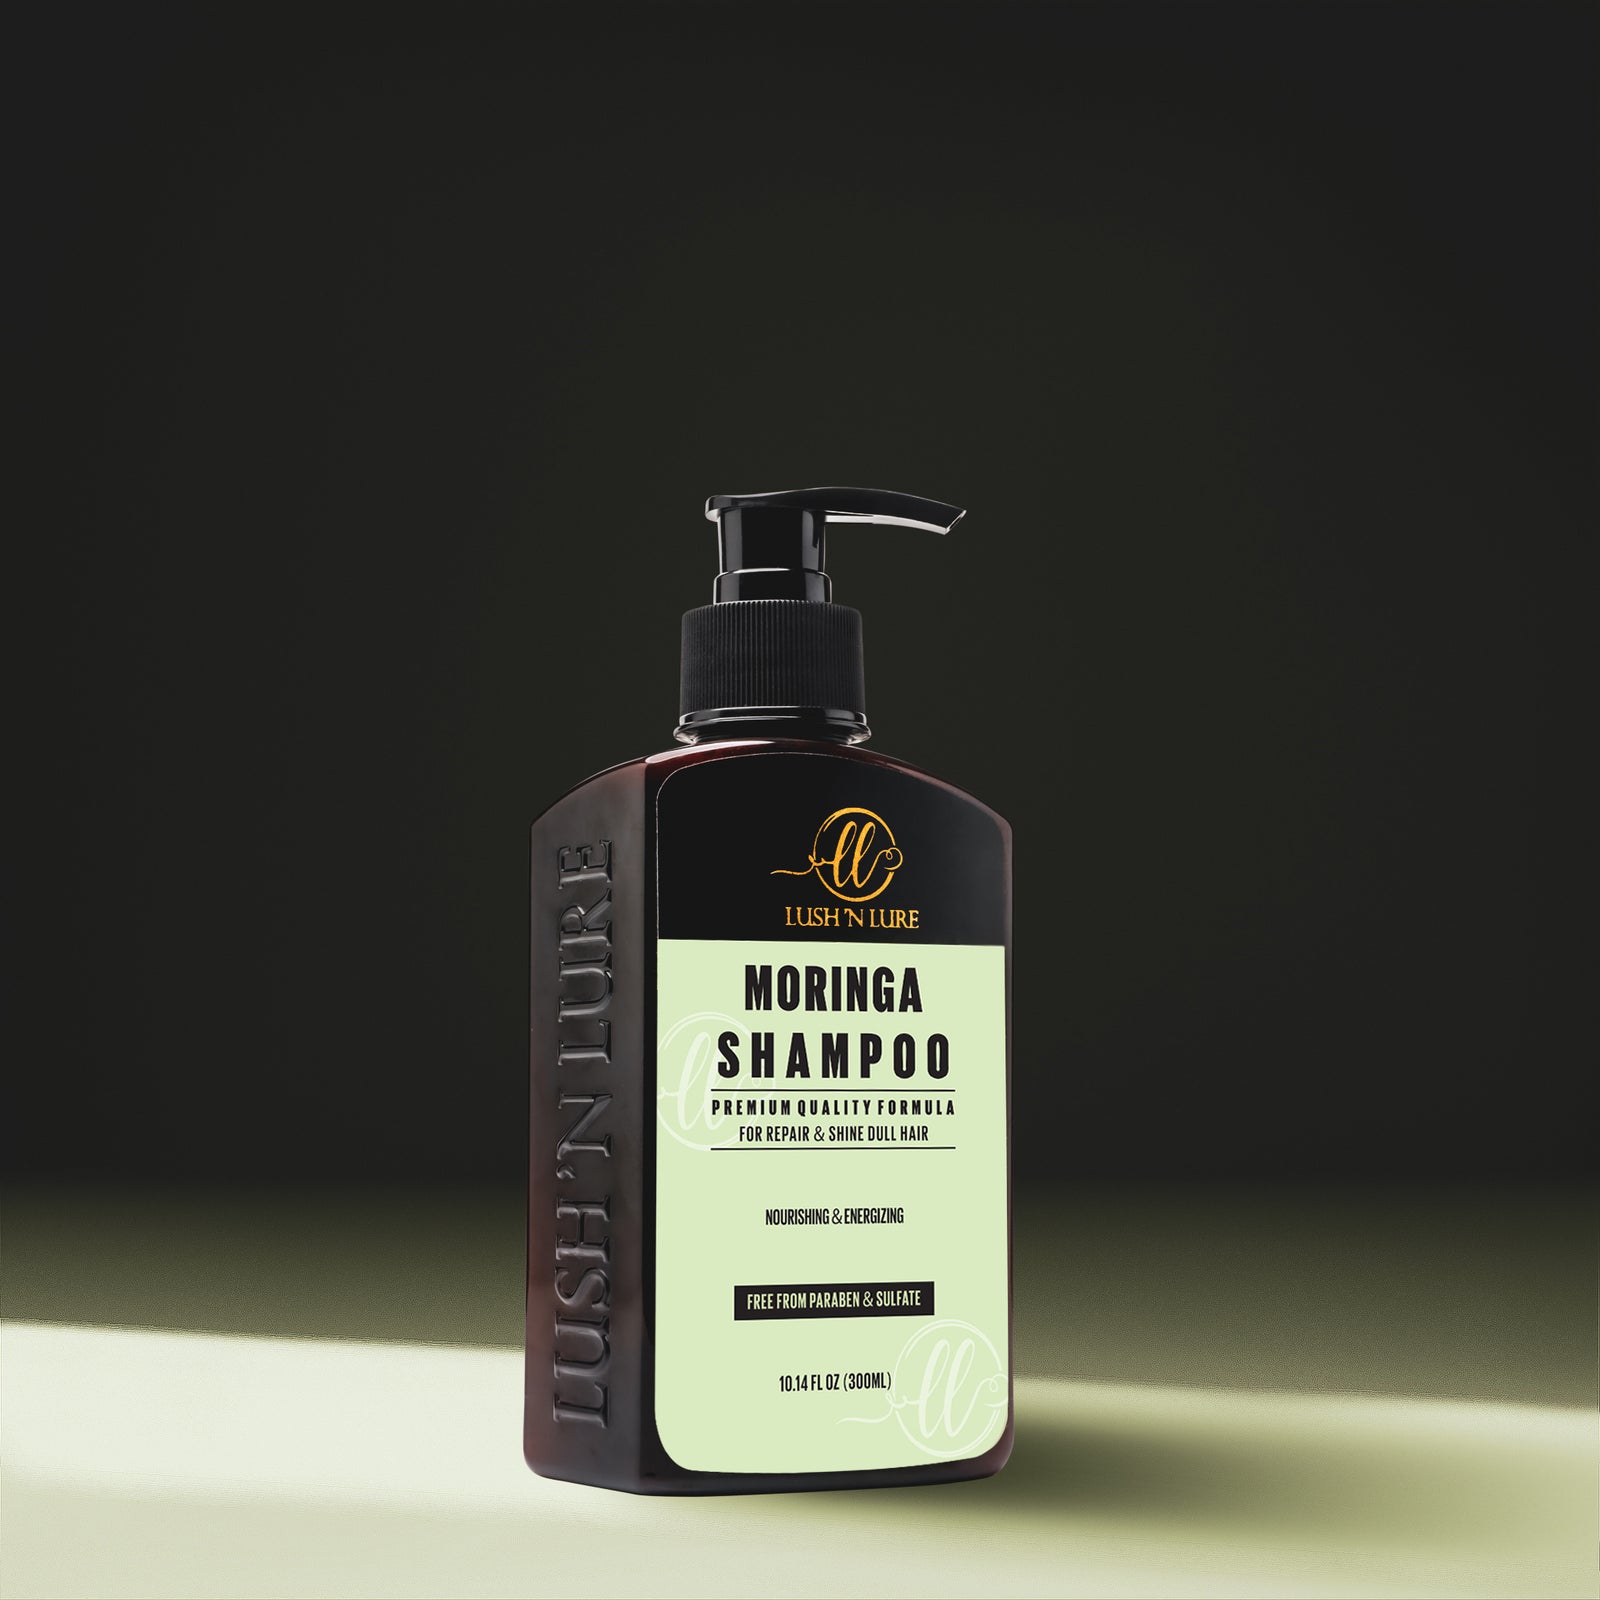 "Image showcasing LUSH 'N LURE Sulfate & Paraben Free Moringa Shampoo, a revitalizing formula designed to nourish and restore shine to dull hair."